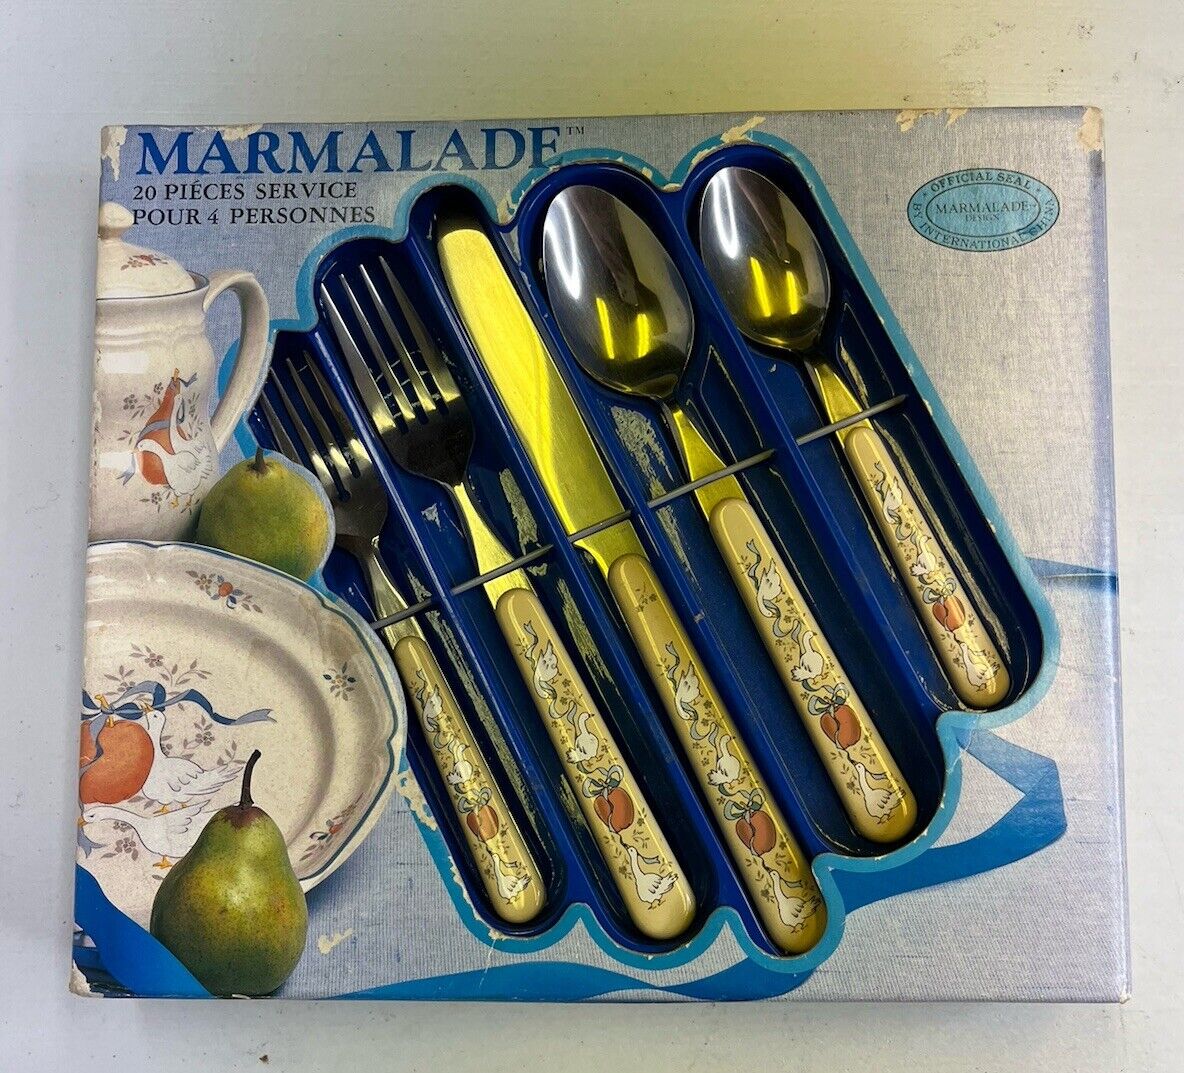 Marmalade Country Geese International Japan Silverware Cutlery Flatware 20 Piece